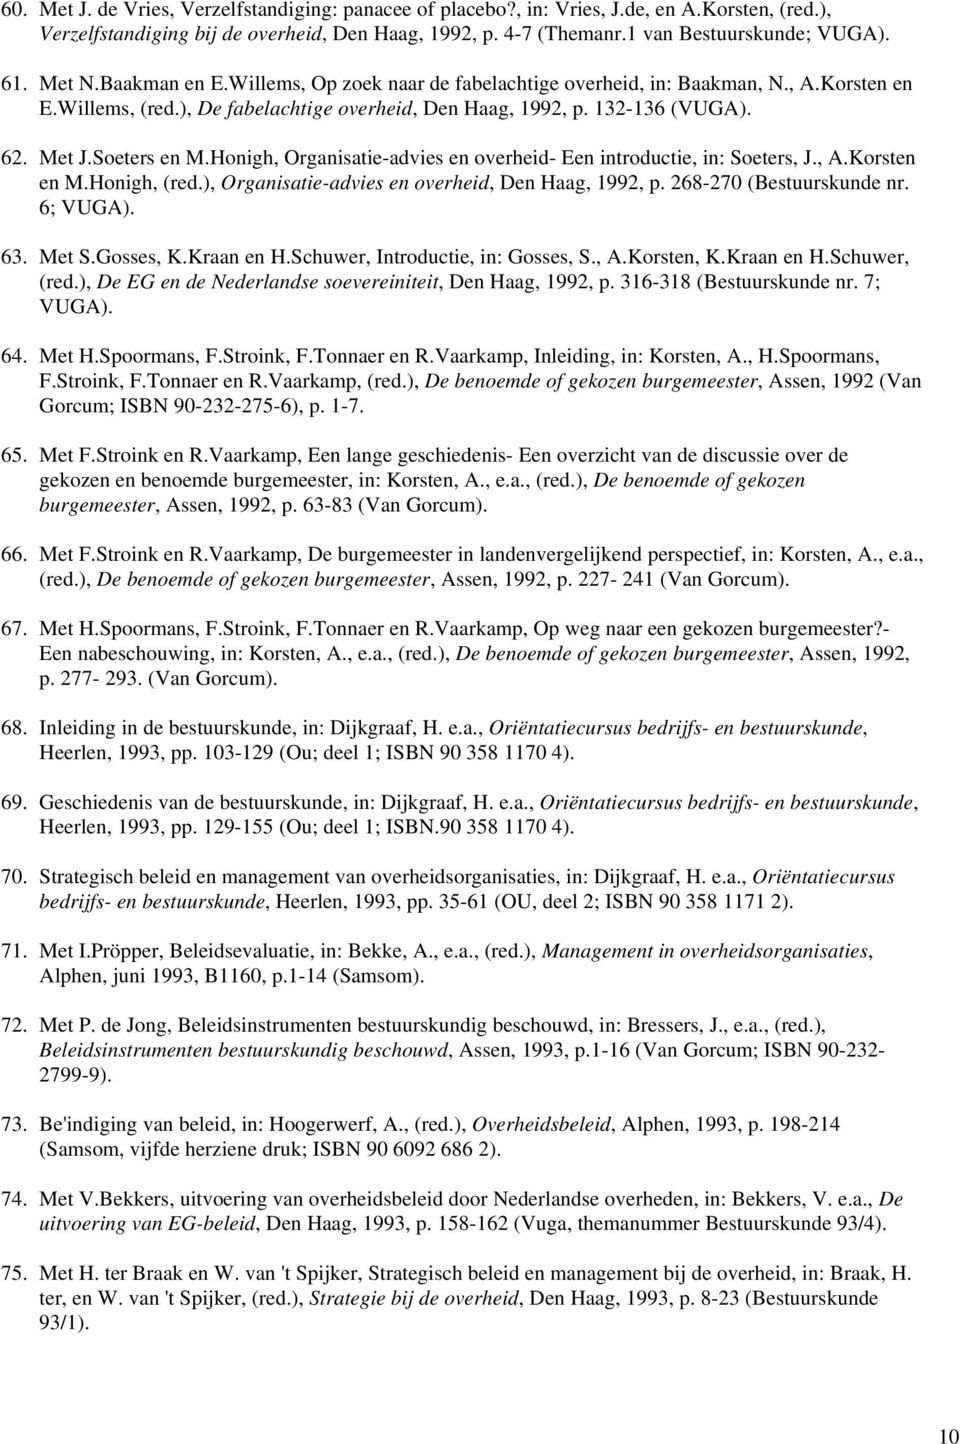 Honigh, Organisatie-advies en overheid- Een introductie, in: Soeters, J., A.Korsten en M.Honigh, (red.), Organisatie-advies en overheid, Den Haag, 1992, p. 268-270 (Bestuurskunde nr. 6; VUGA). 63.